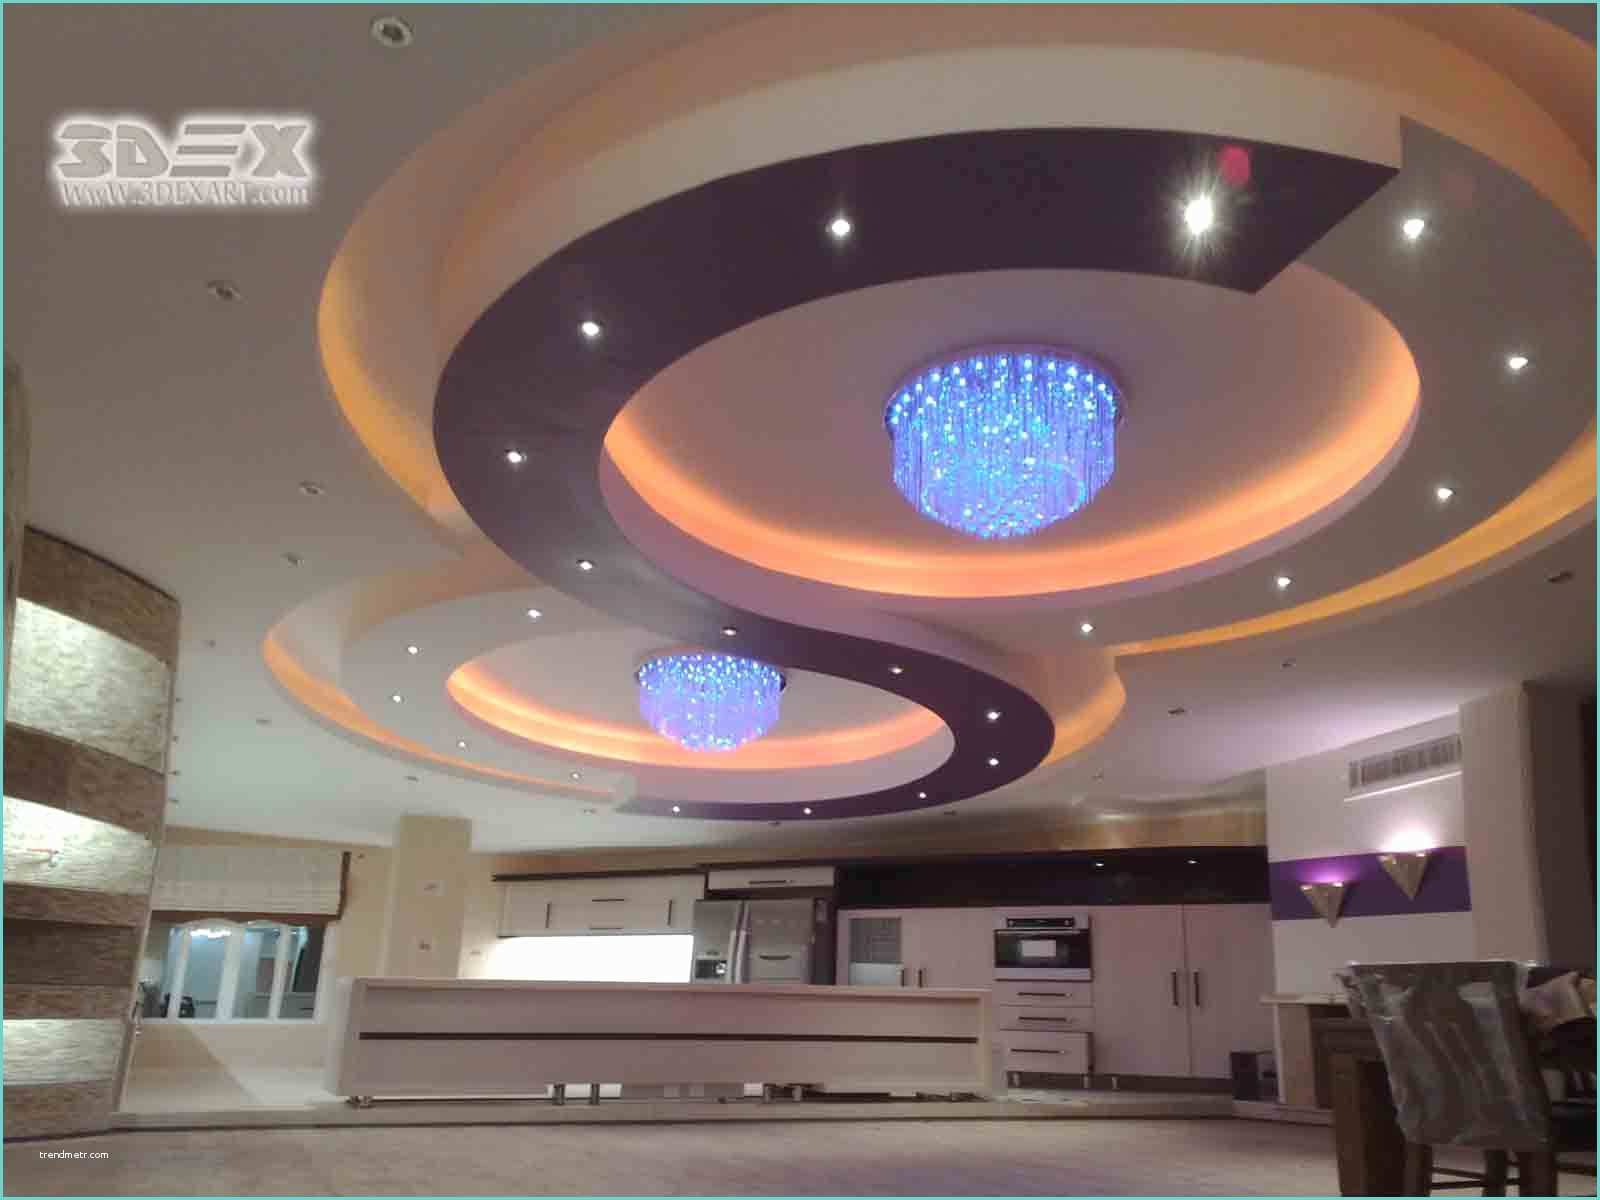 Latest Design Of Pop Latest Pop Design for Hall 50 False Ceiling Designs for